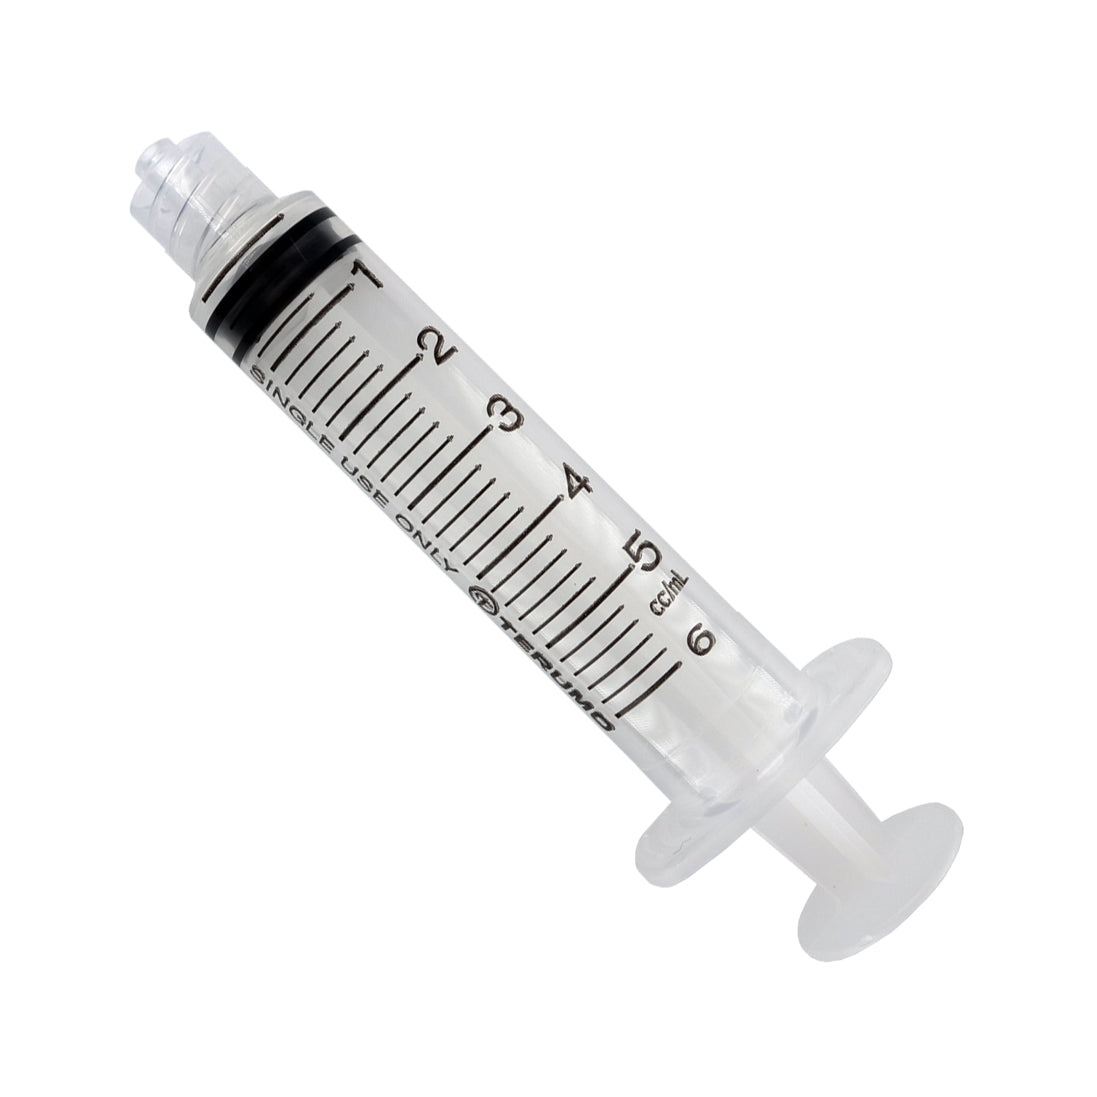 What is luer lock syringe?